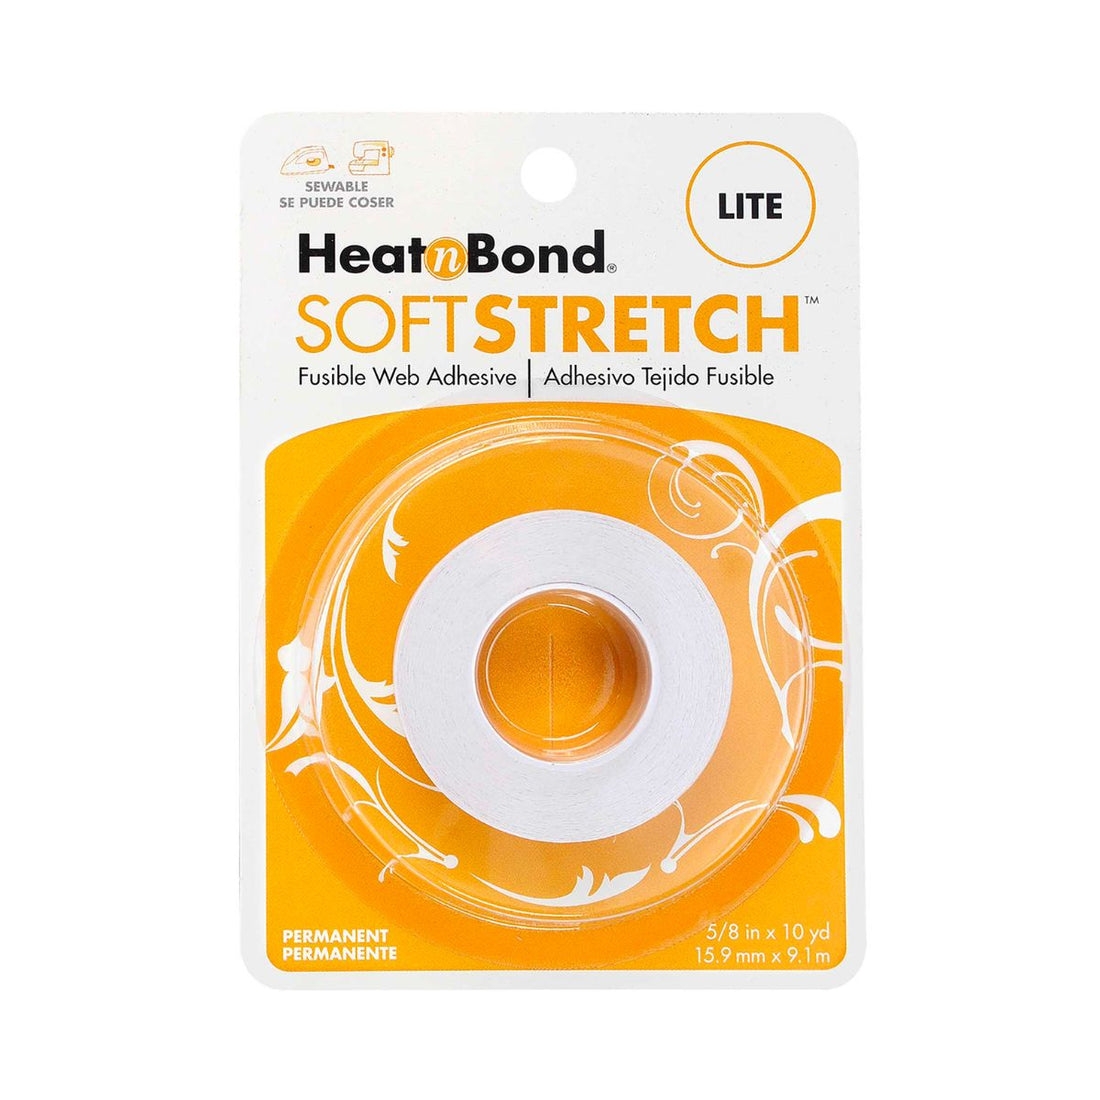 heatnbond soft stretch lite adhesive tape